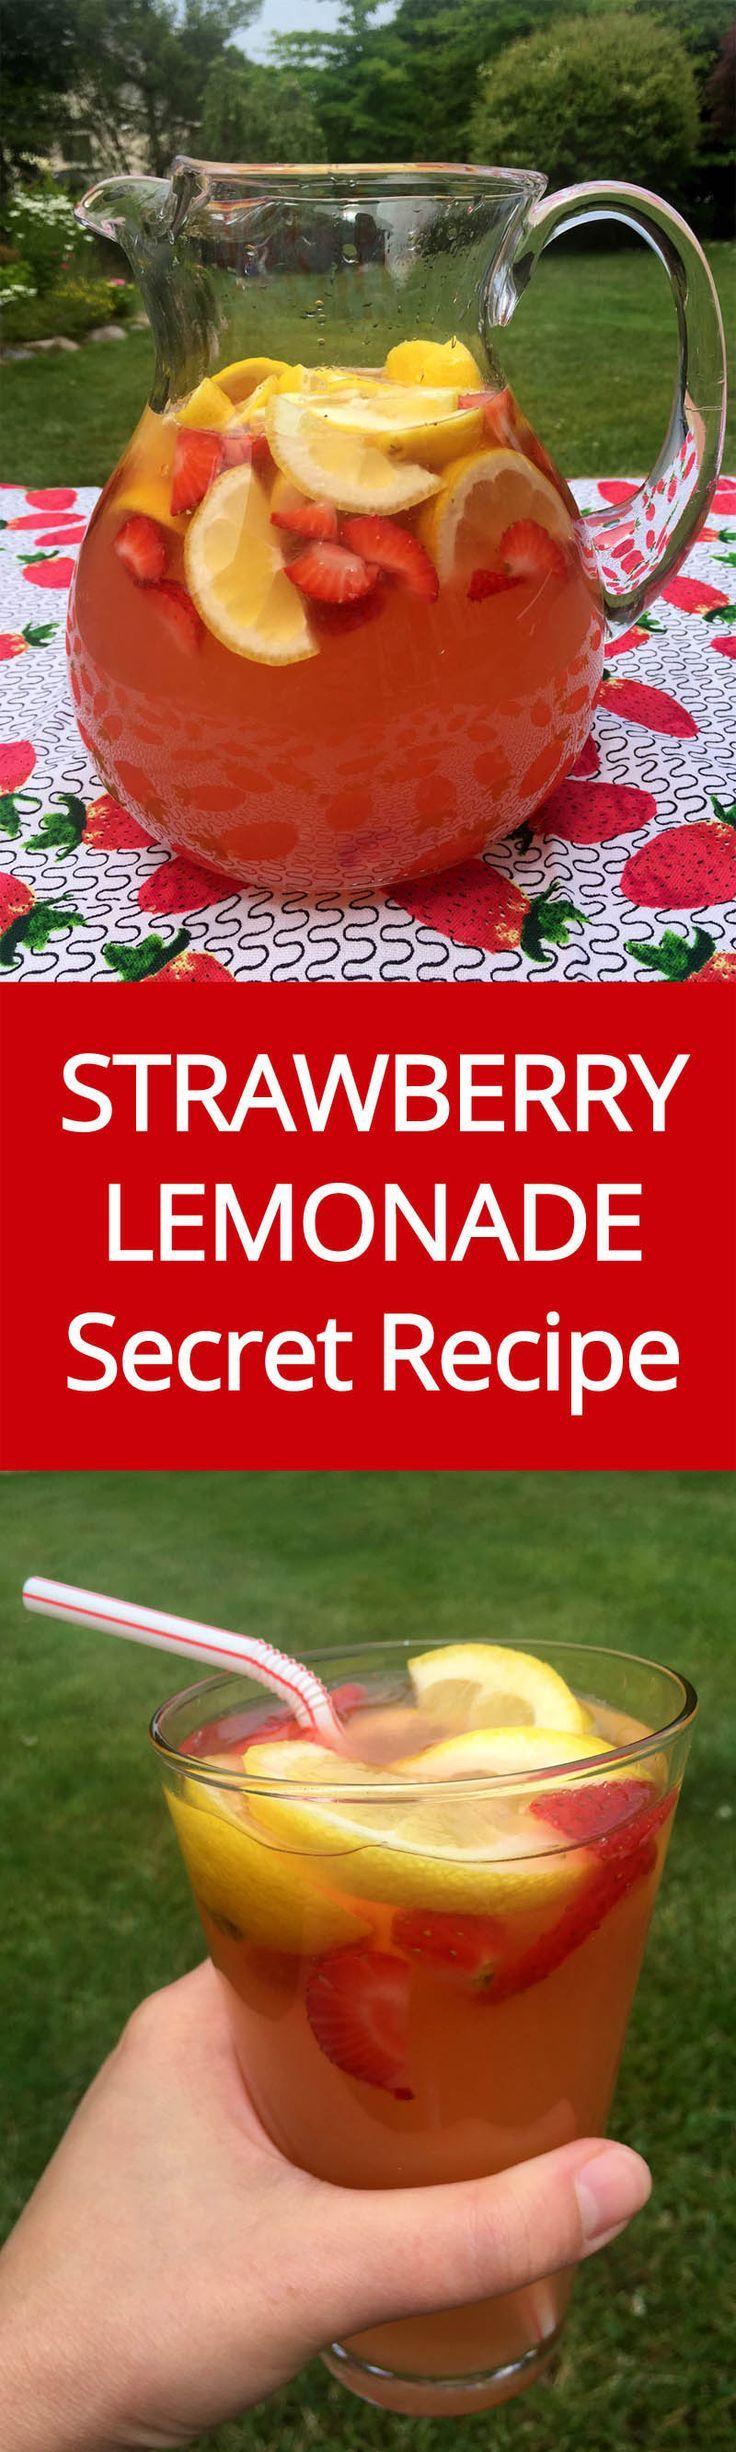 Wedding - Homemade Strawberry Lemonade Recipe With Freshly Squeezed Lemons & Strawberry Slices